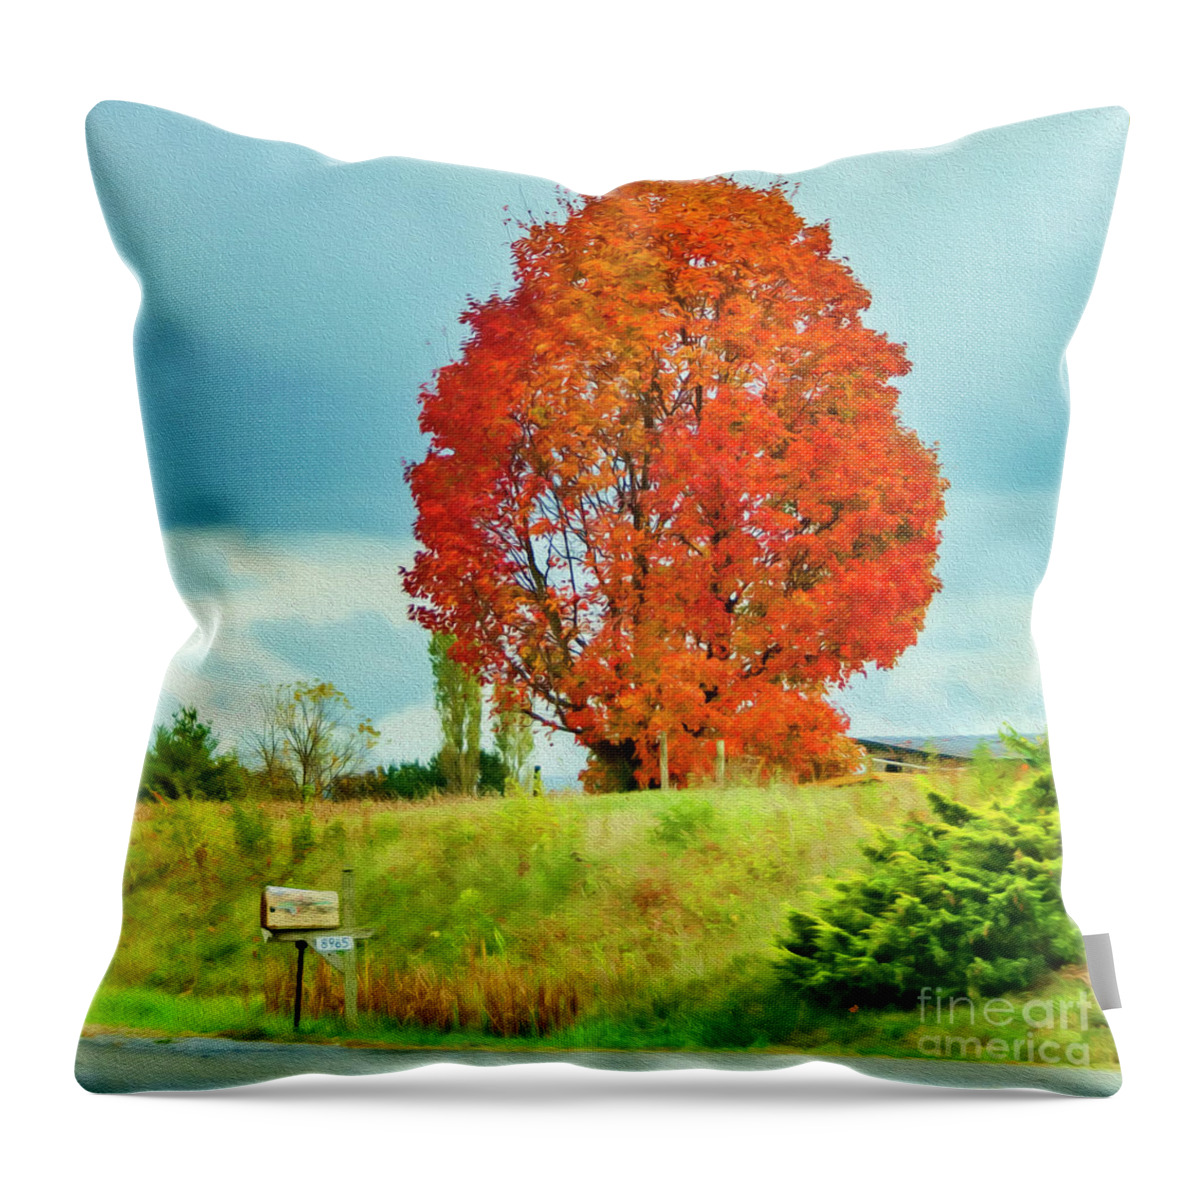 Virginia Throw Pillow featuring the photograph Autumn in Virginia by Lenore Locken